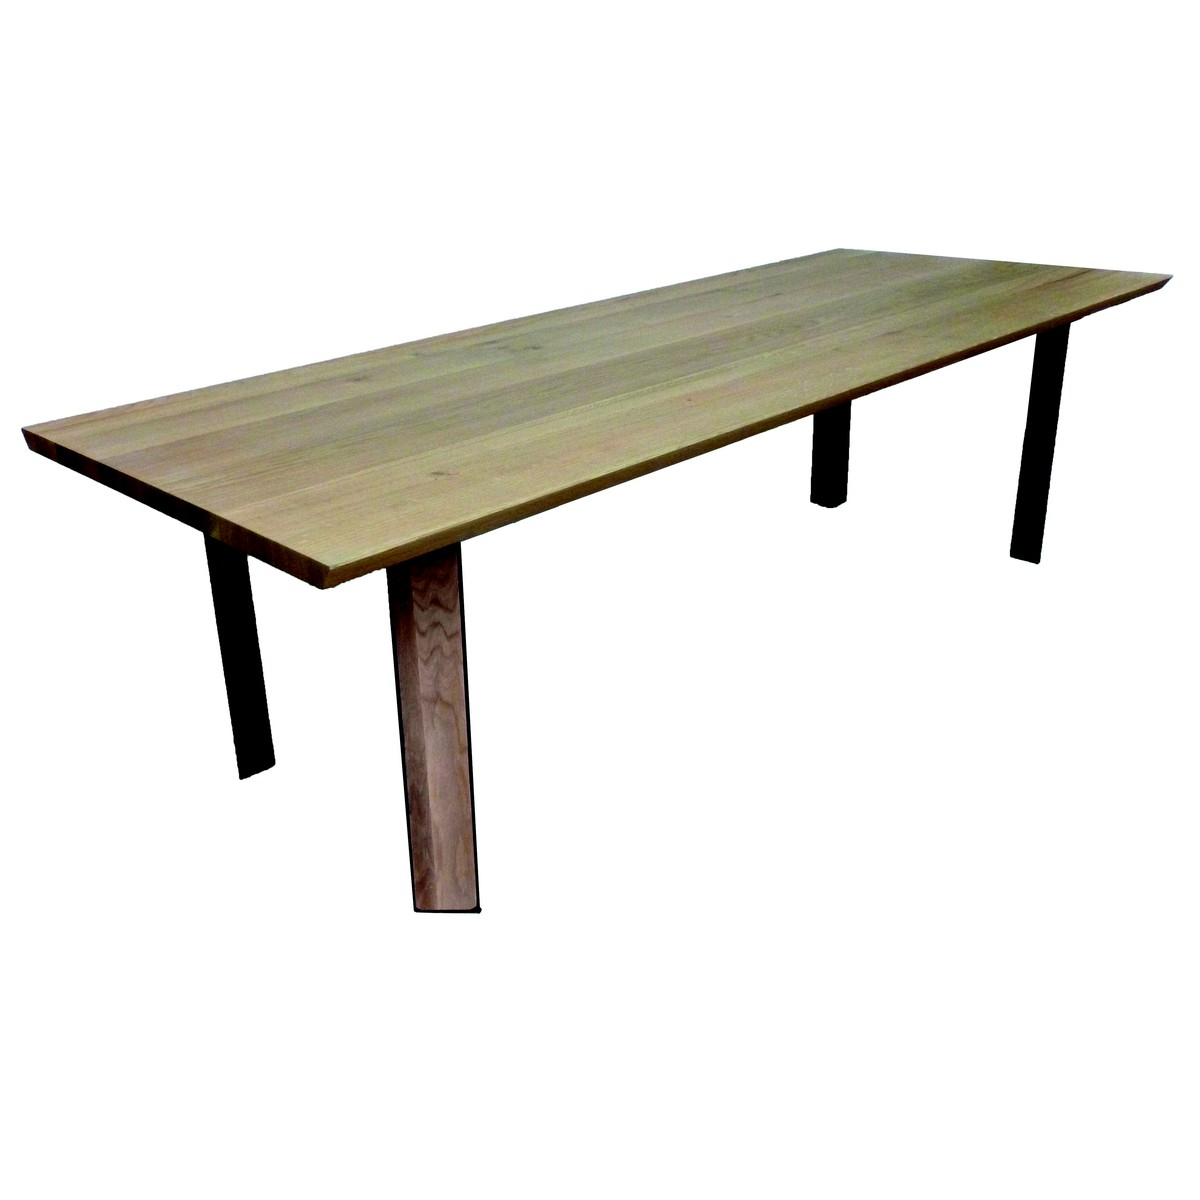   Table Omar Seven rectangulaire  160x100x77cm